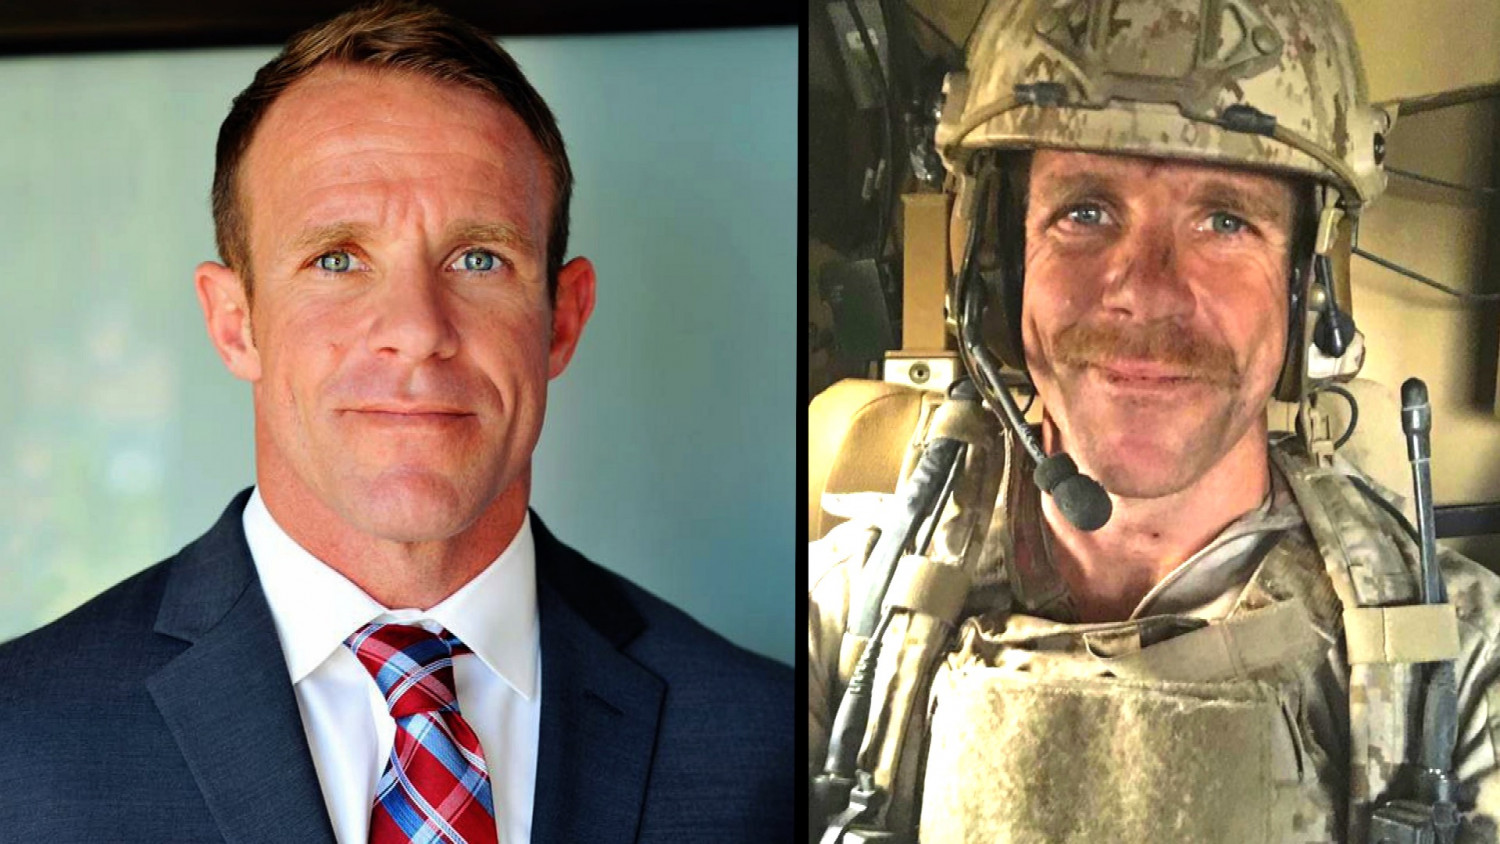 Trump Grants Pardons to 2 Military Members, Restores Rank to Navy SEAL Eddie Gallagher